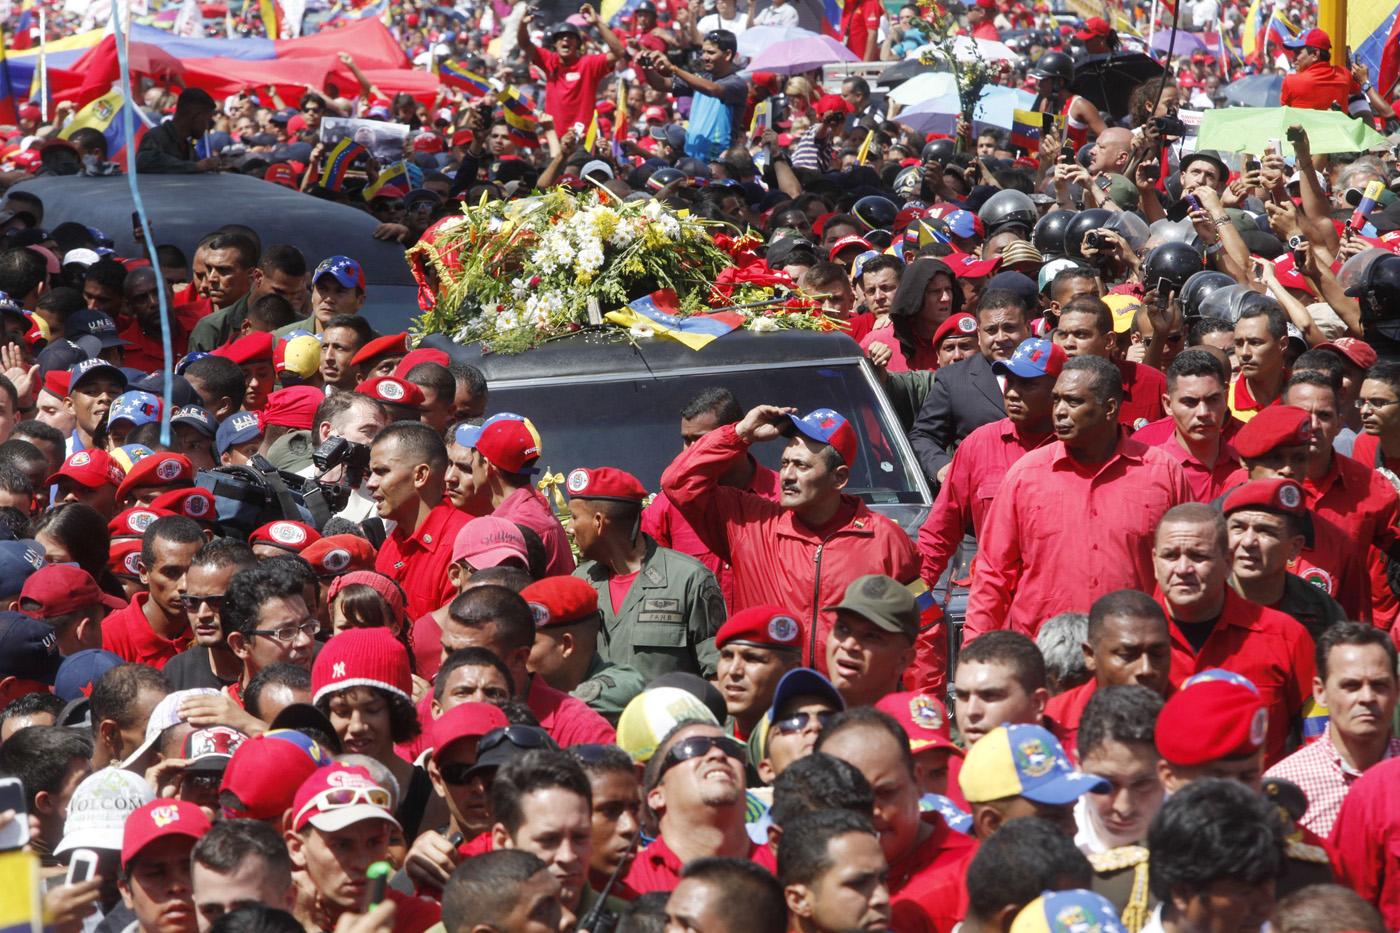 Seguidores de Chávez llenan su féretro de objetos simbólicos durante 7 horas de recorrido (FOTOS)